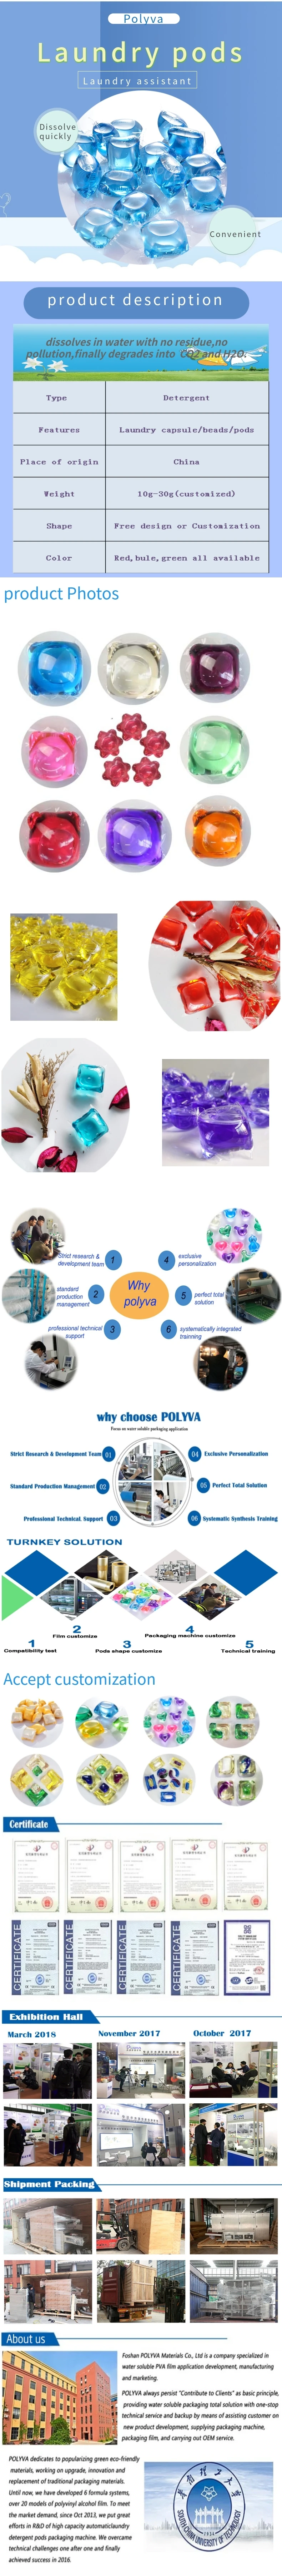 Polyva 2019 long lasting fragrance washing laundry pods incense beads detergent pods bulk wholesale